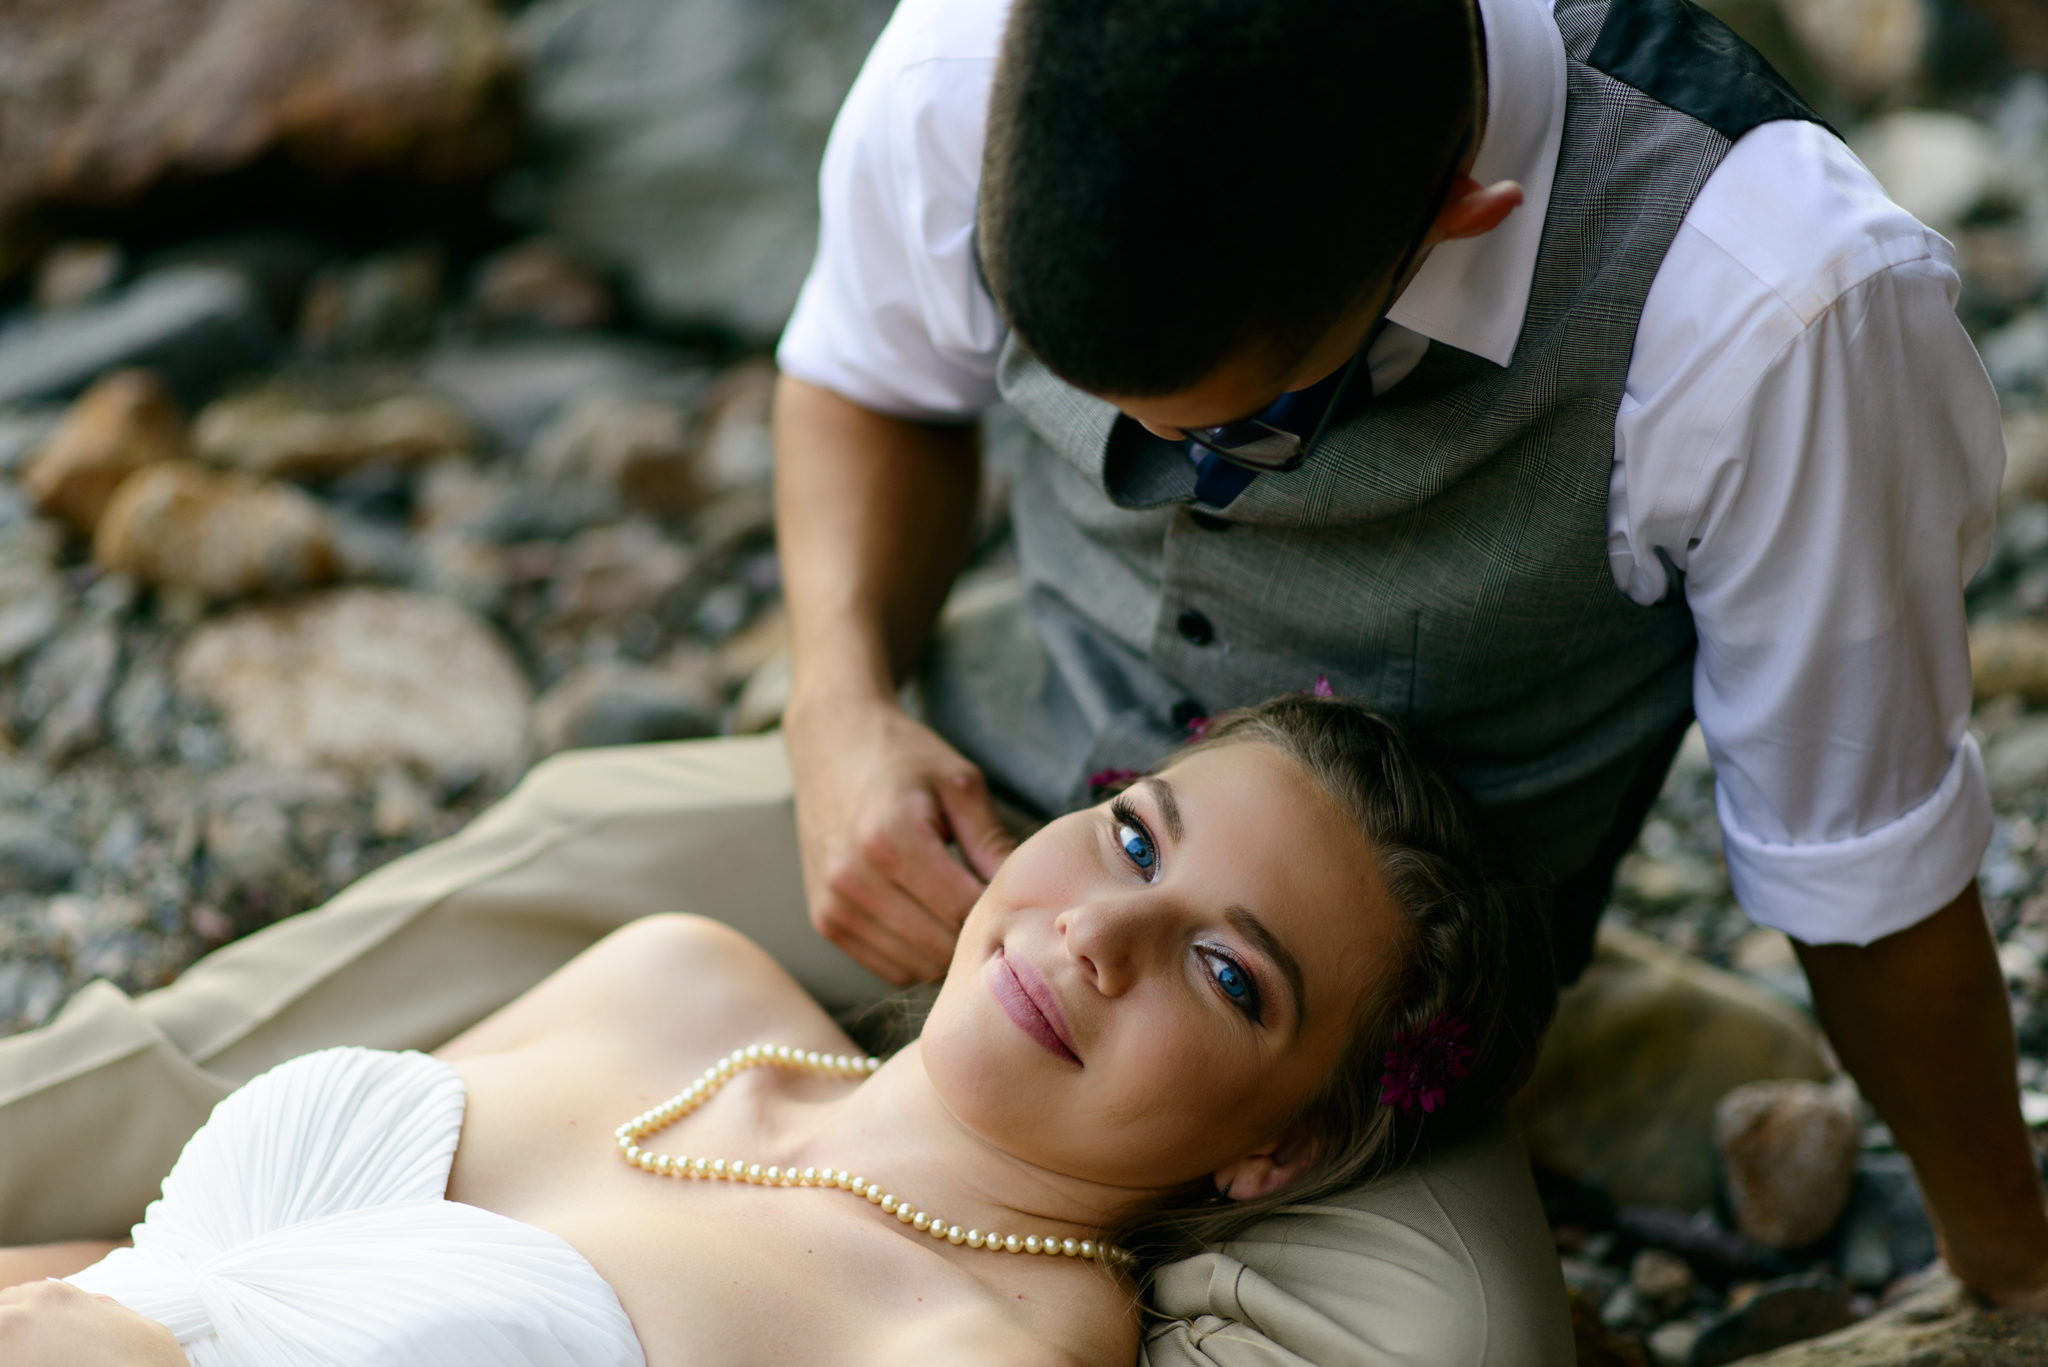 #WeddingWednesday: Photographing Small, Intimate Ceremonies